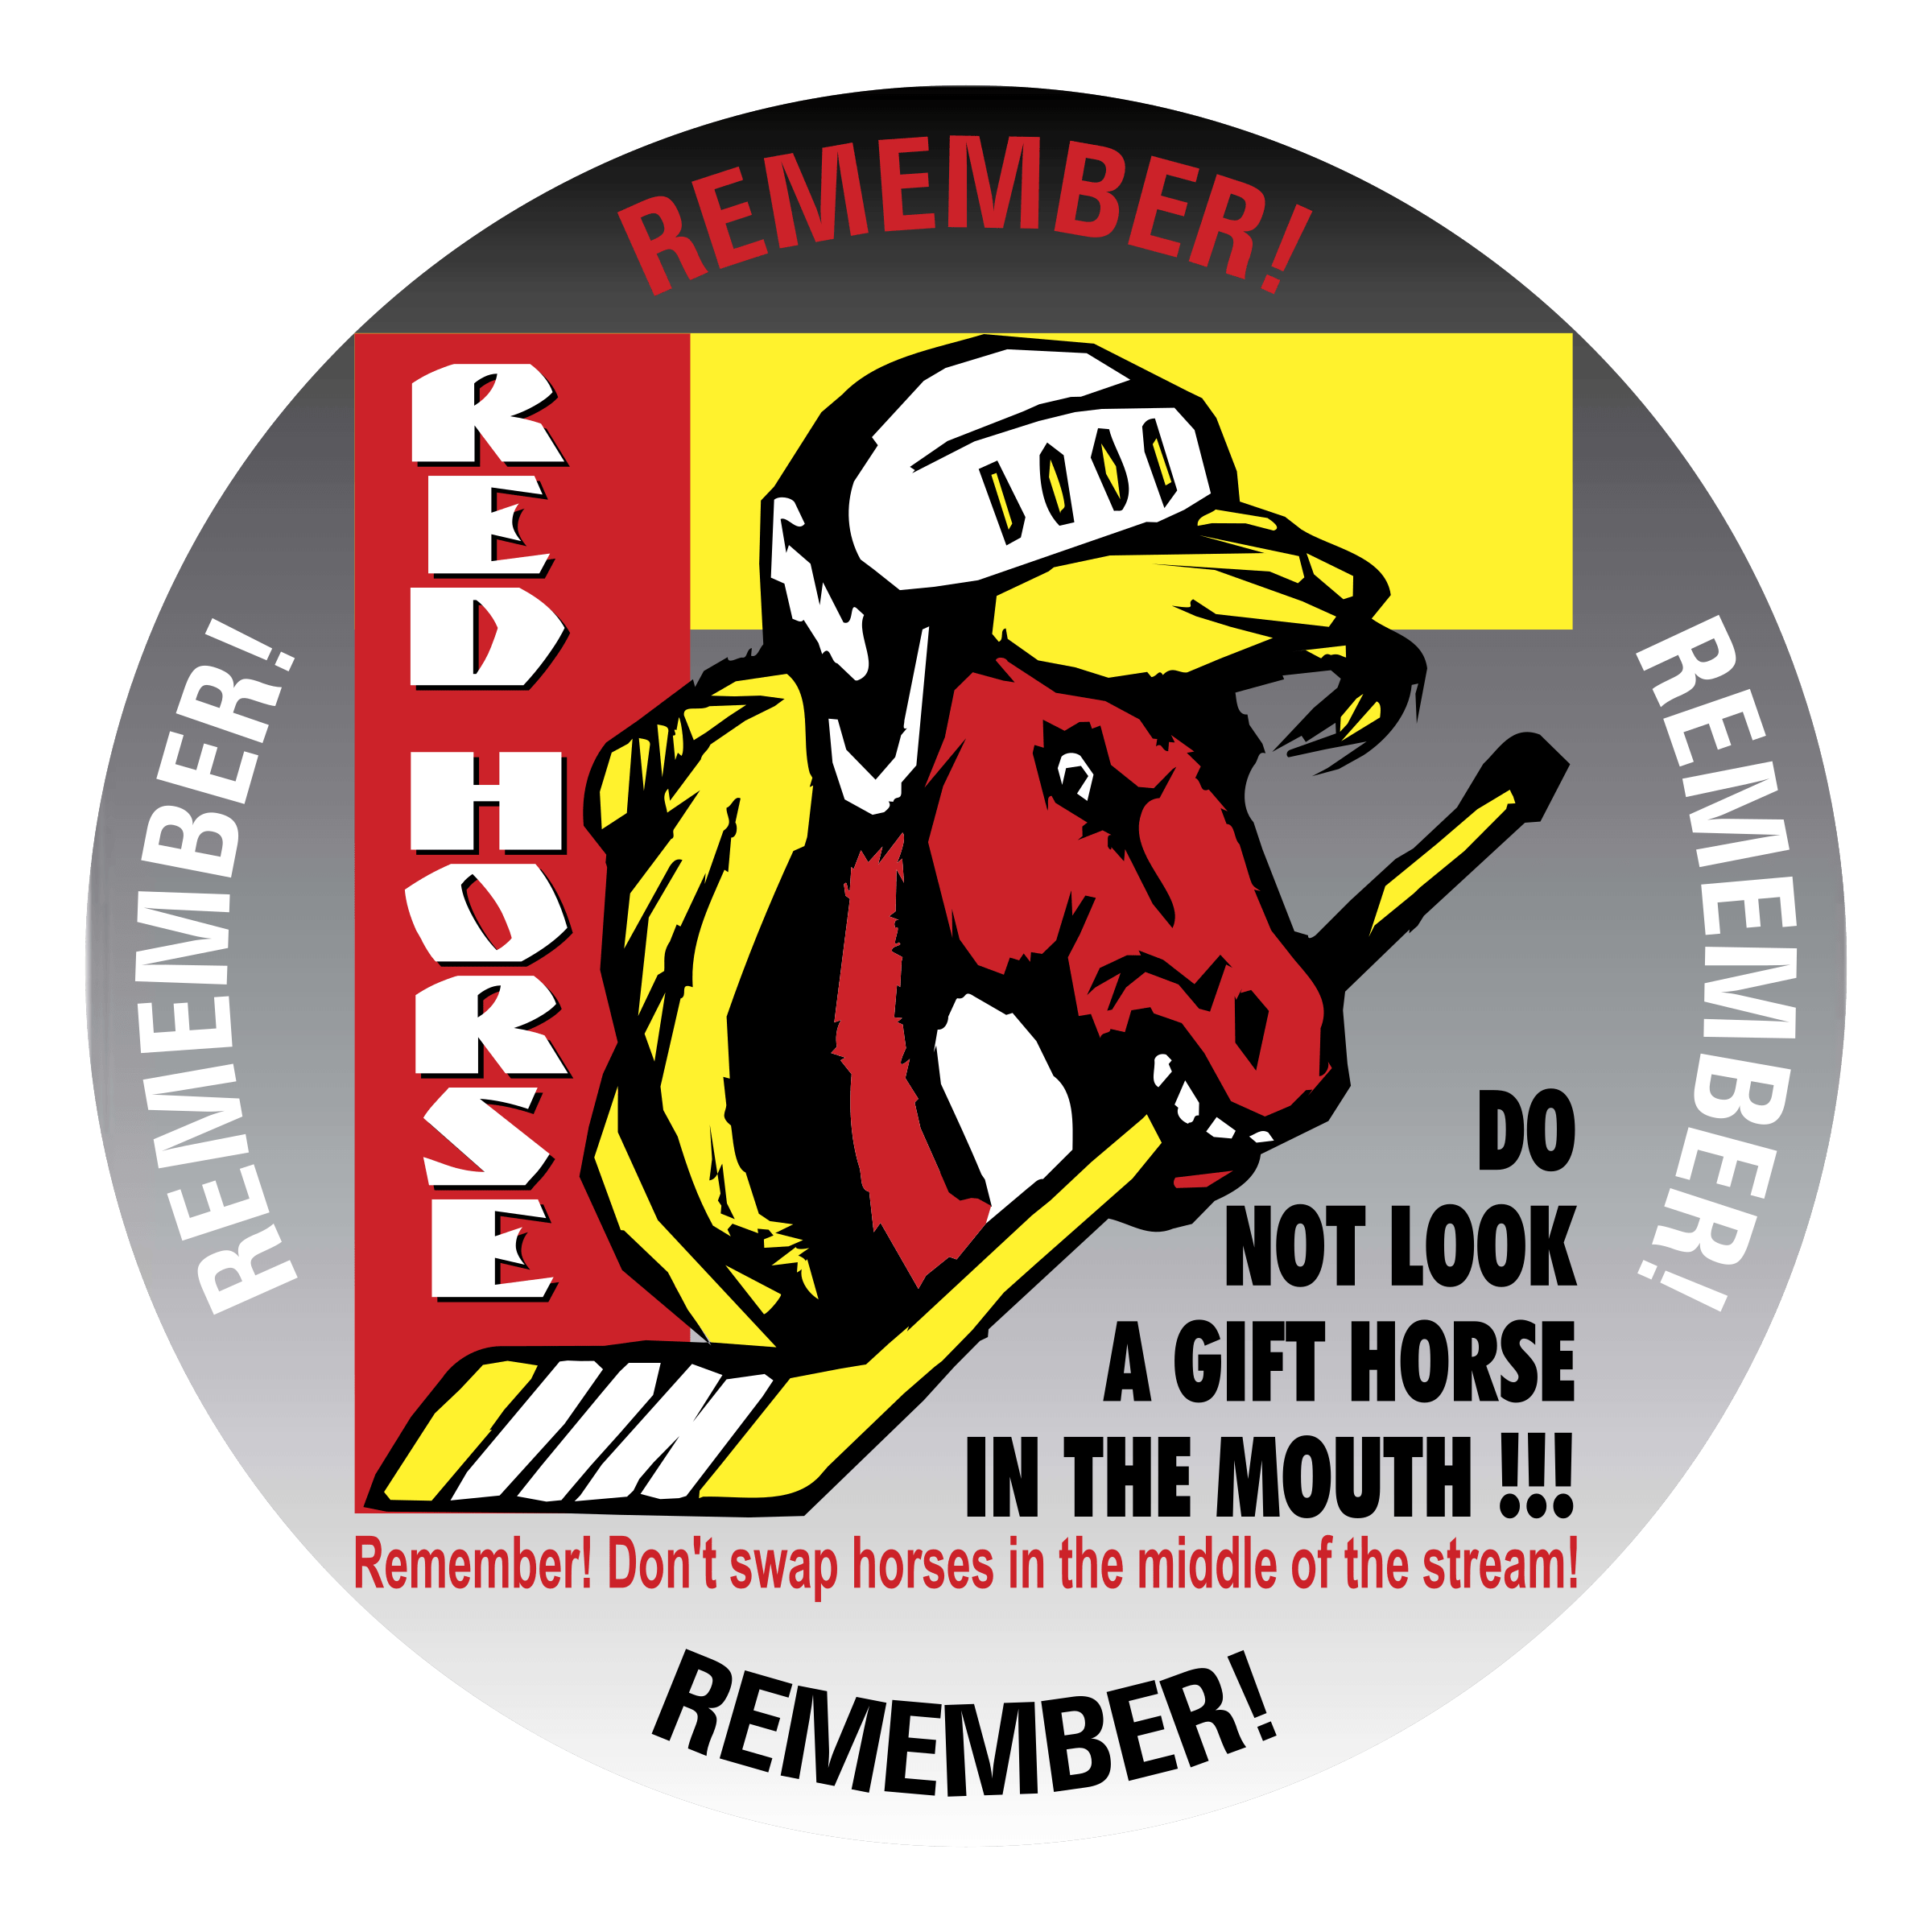 Red Horse Logo - Red Horse Logo PNG Transparent & SVG Vector - Freebie Supply